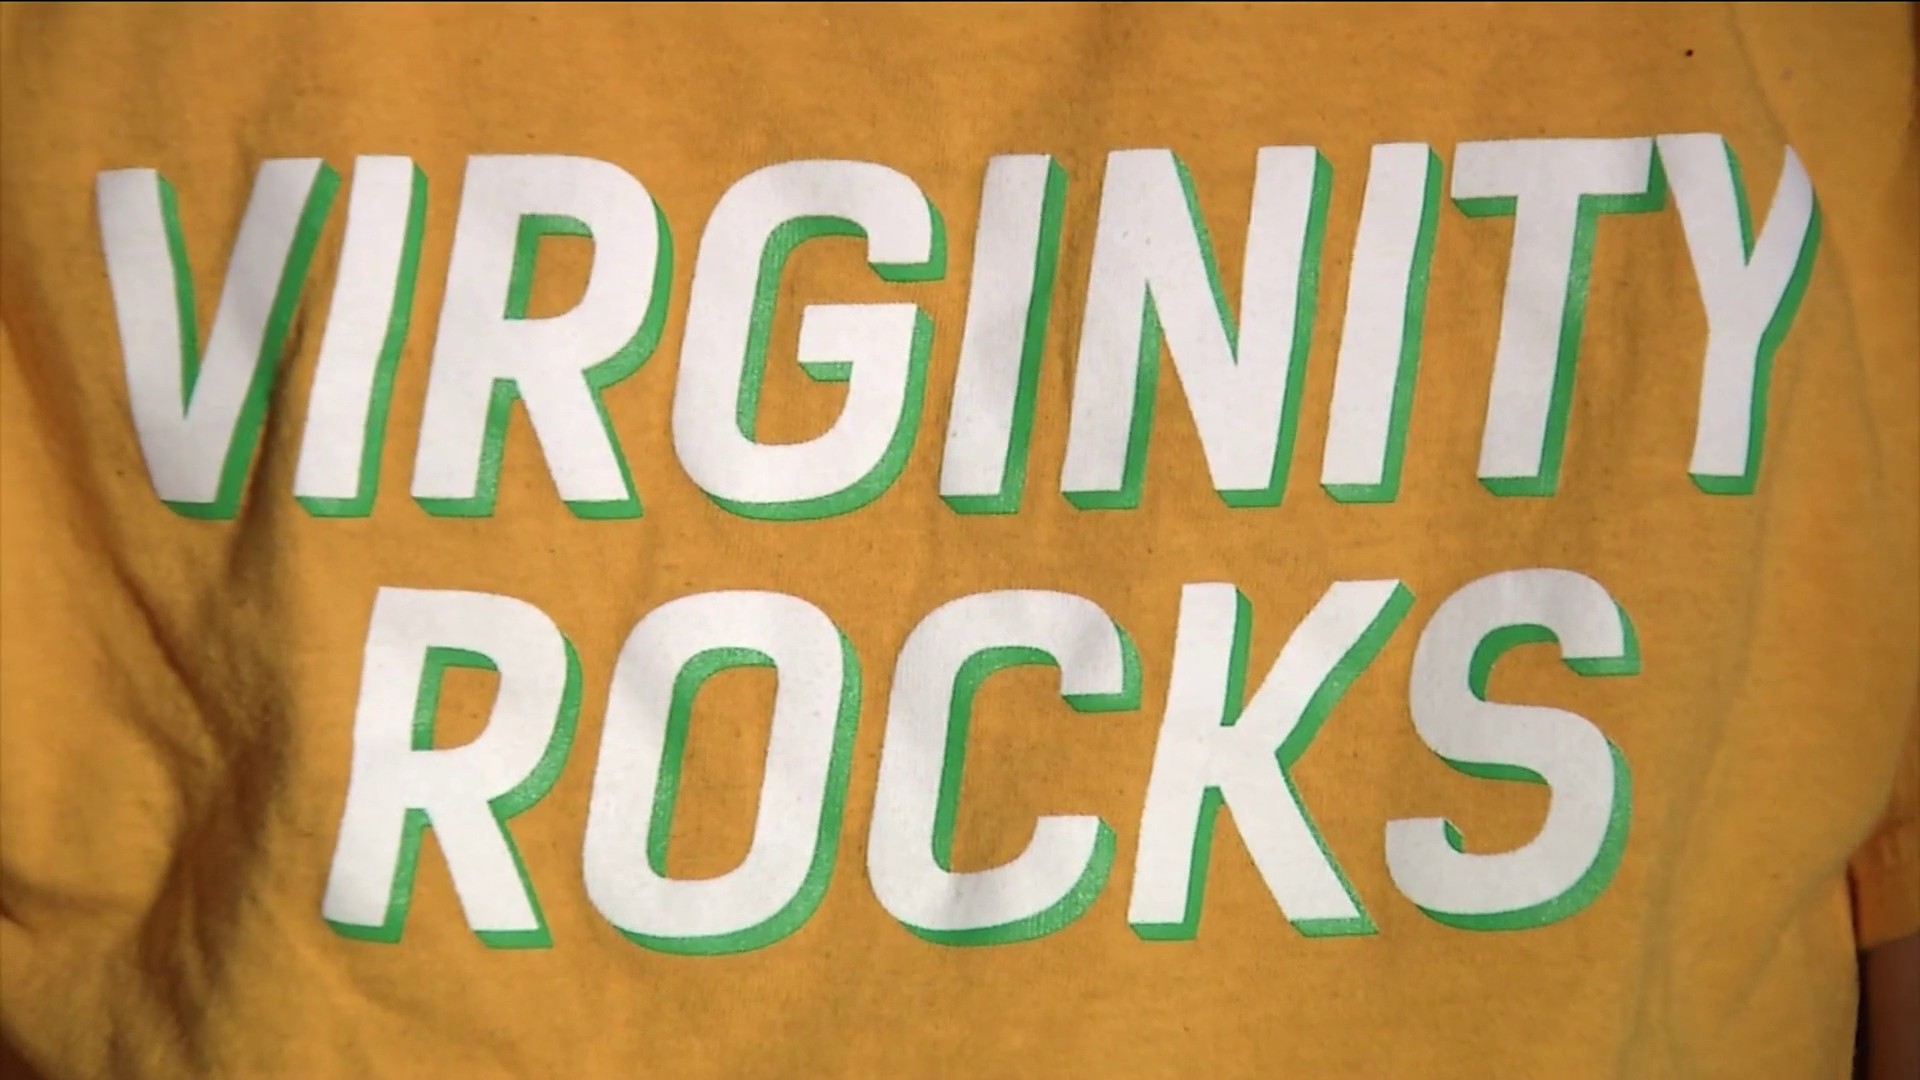 Virginity Rocks': Student says he was. 